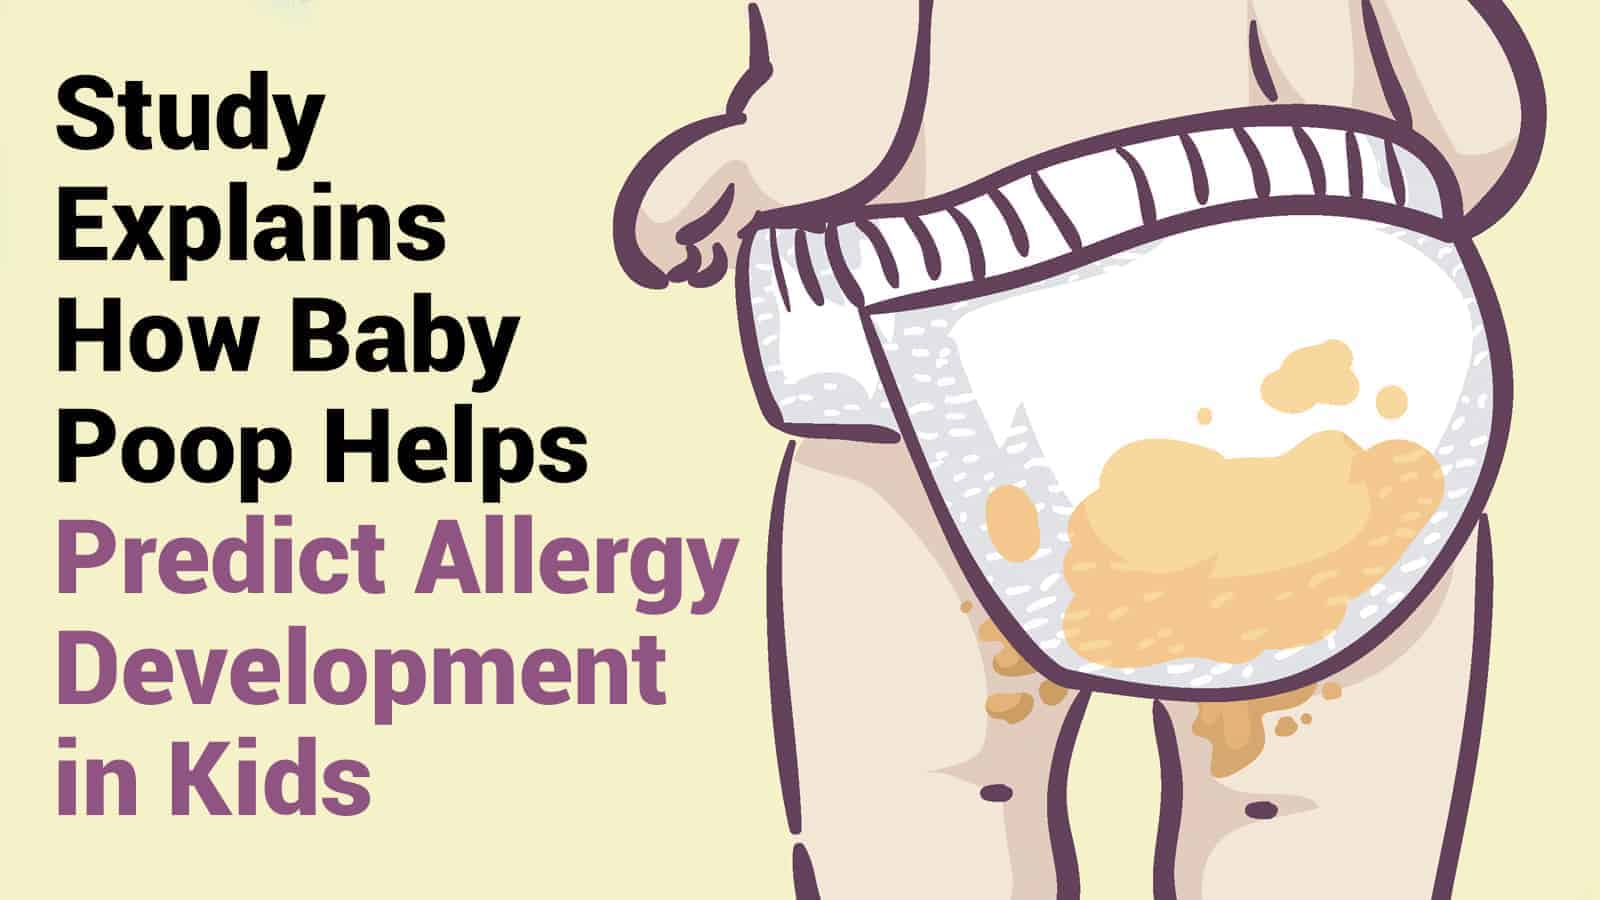 Study Explains How Baby Poop Helps Predict Allergy Development in Kids